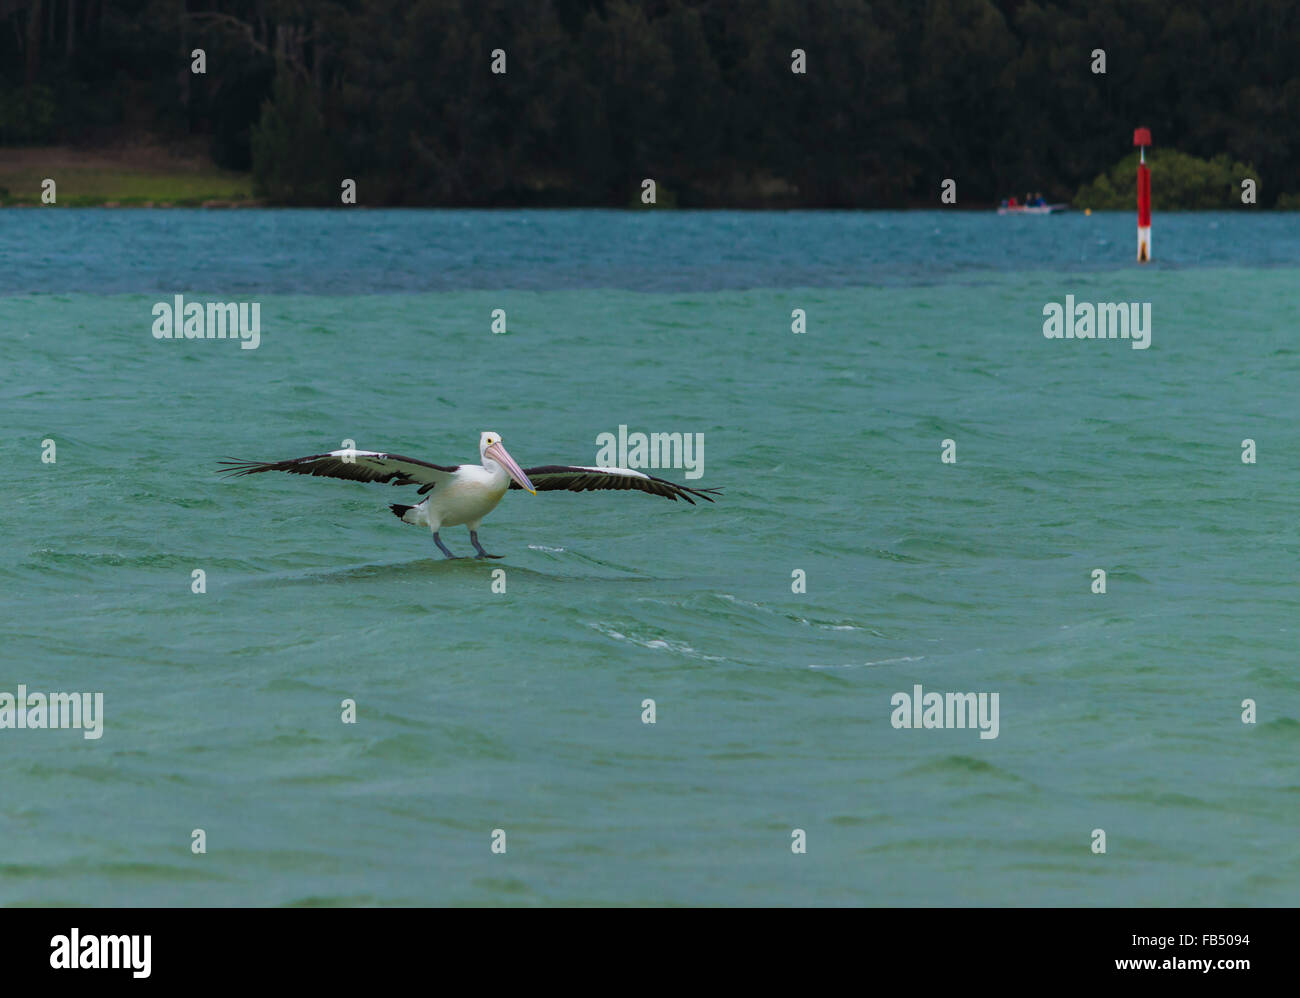 The Australian pelican Pelecanus conspicillatus  large waterbird, Pelecanidae, Pelican landing on water. Stock Photo